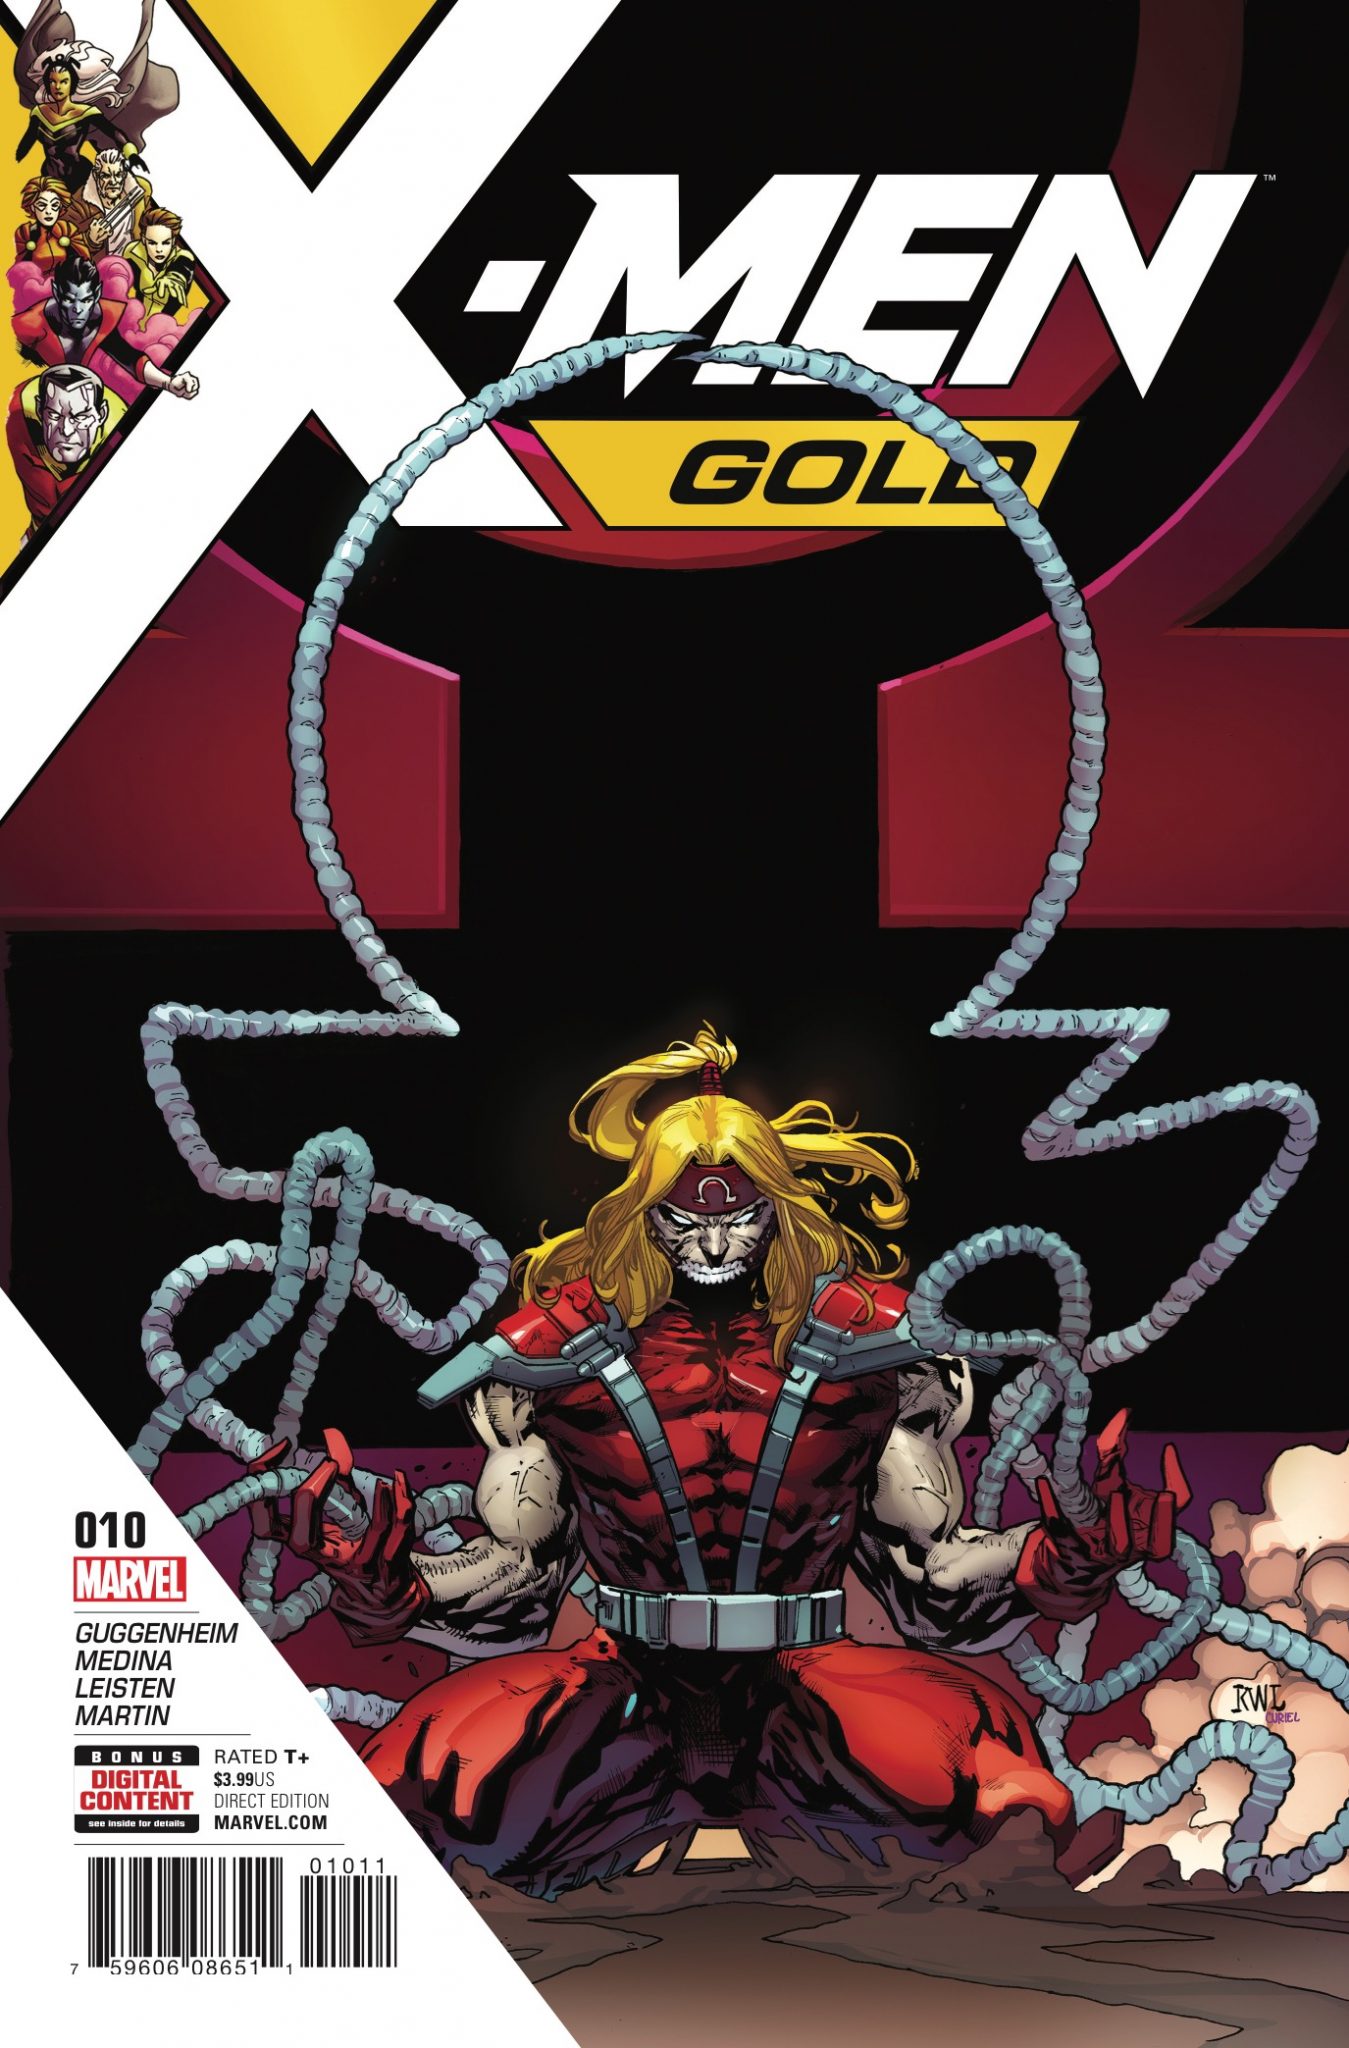 X-Men: Gold #10 Review